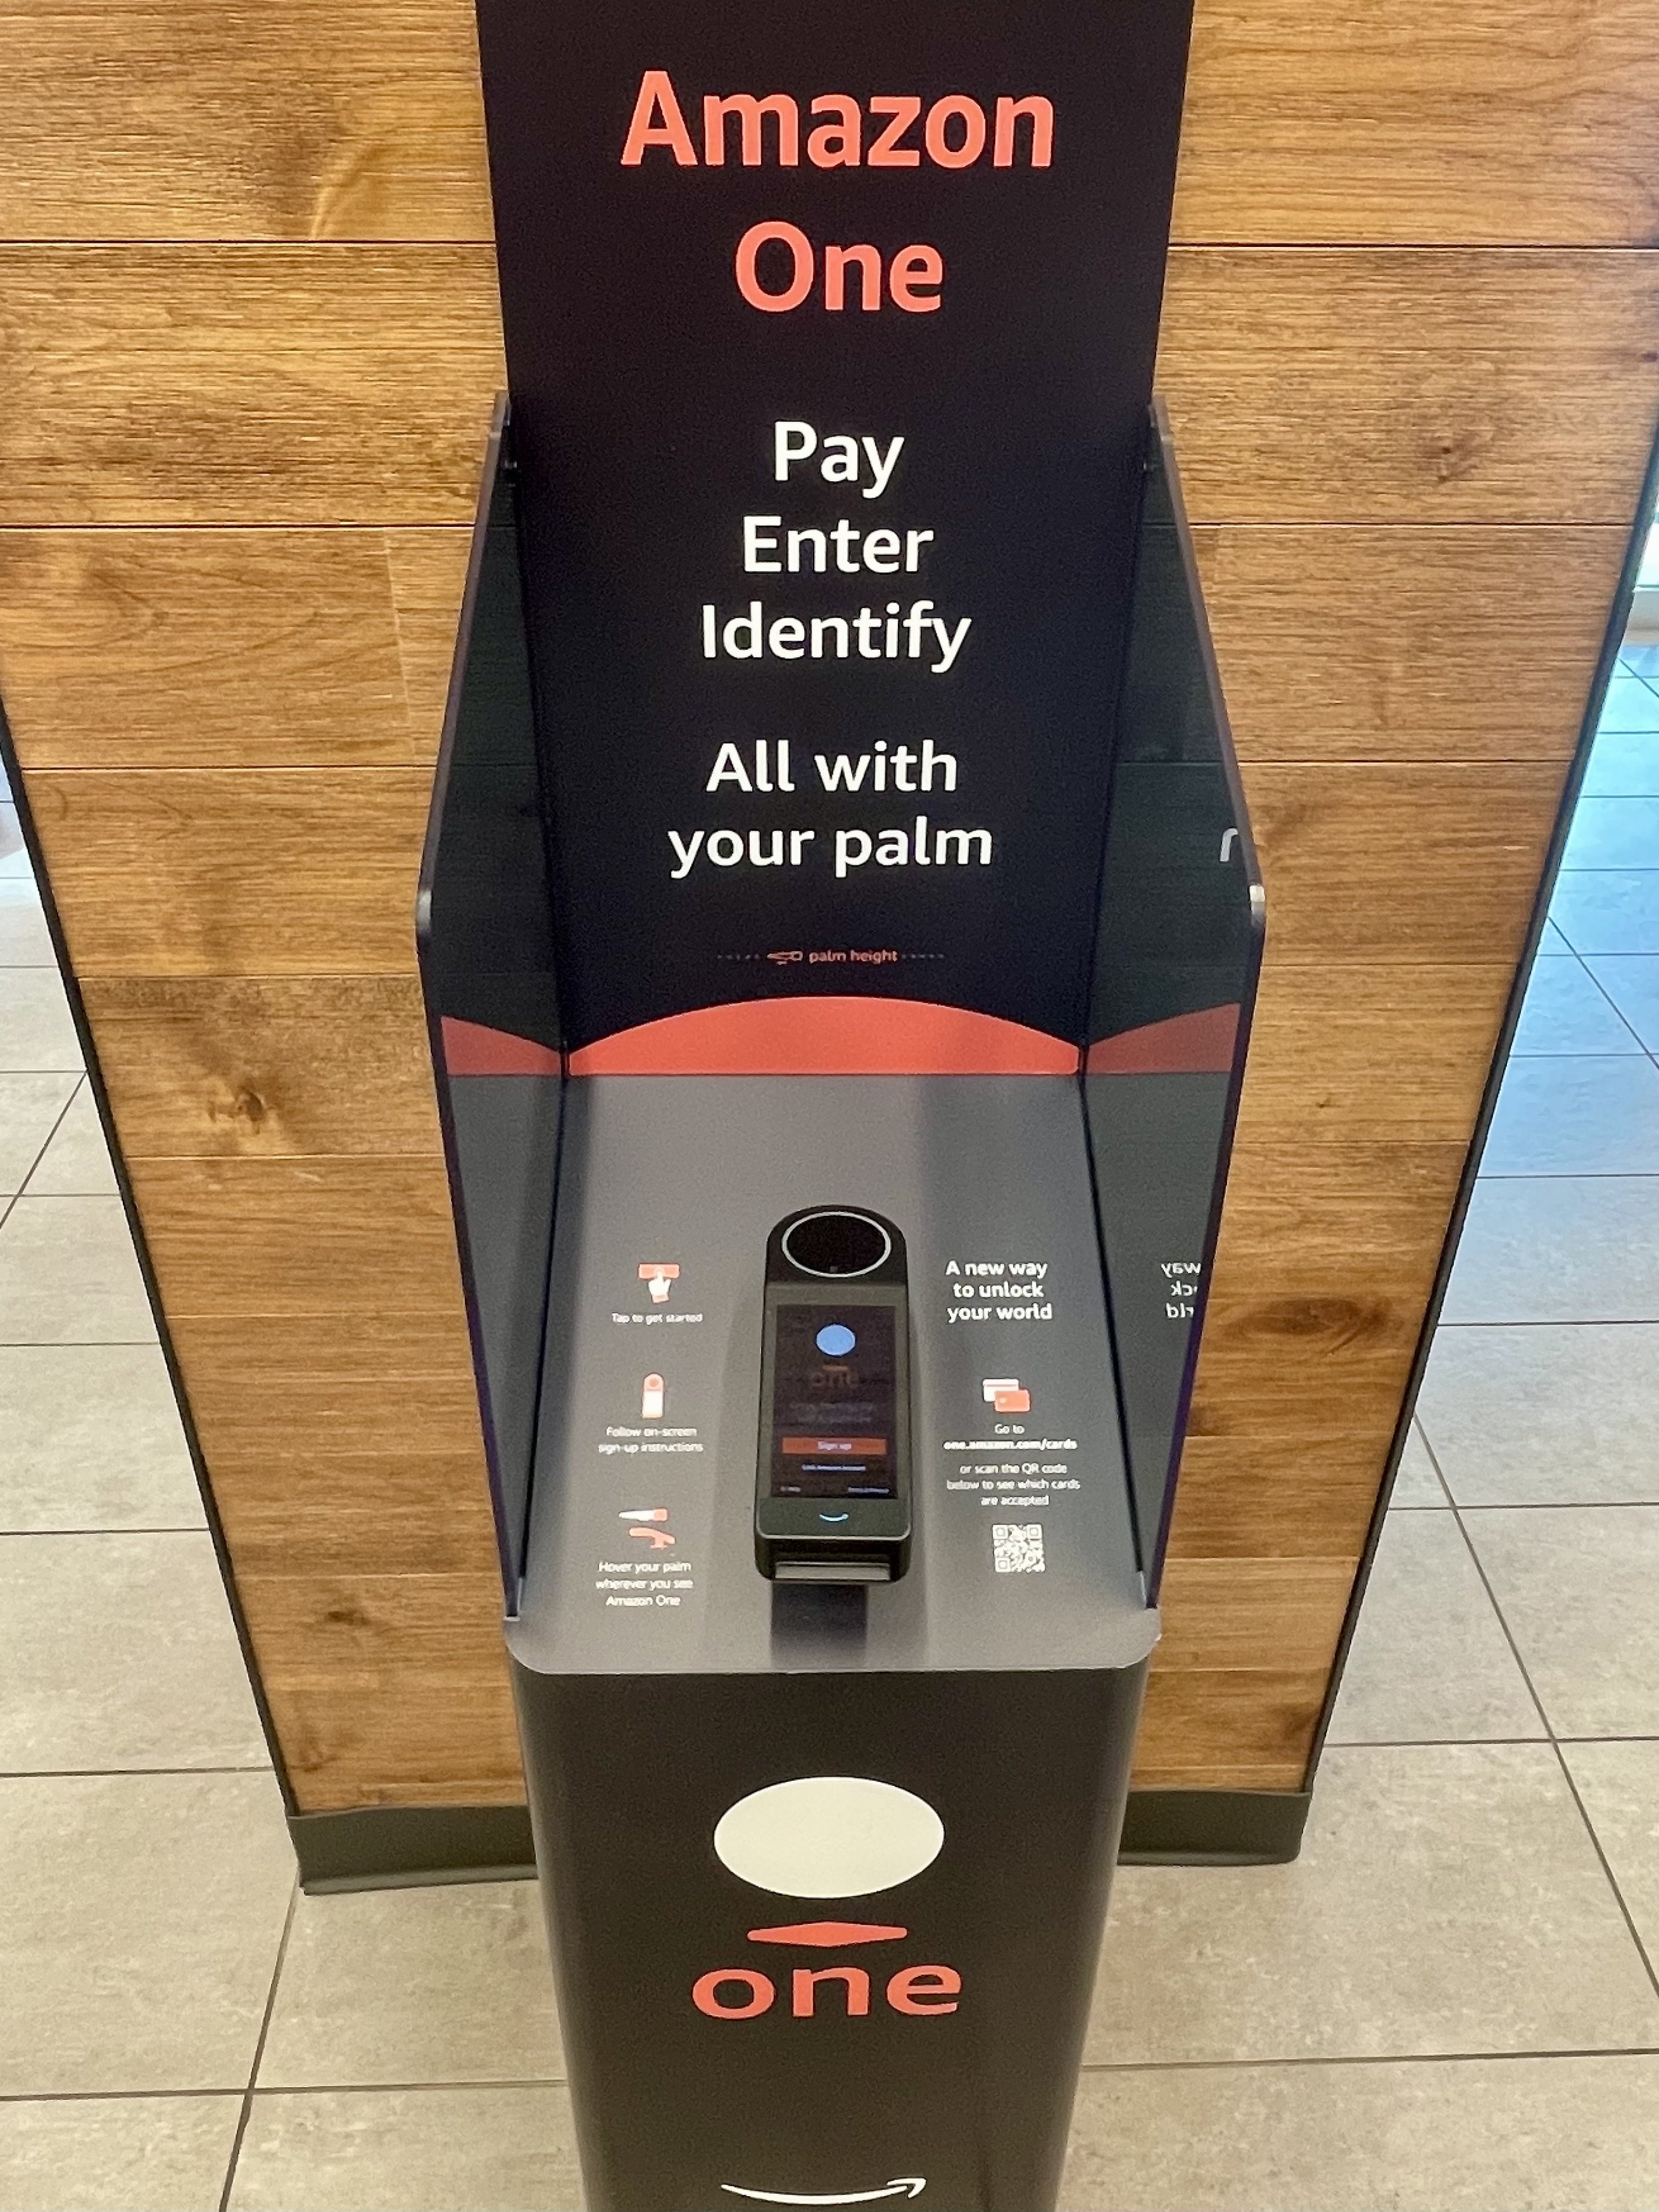 Amazon One payment kiosk